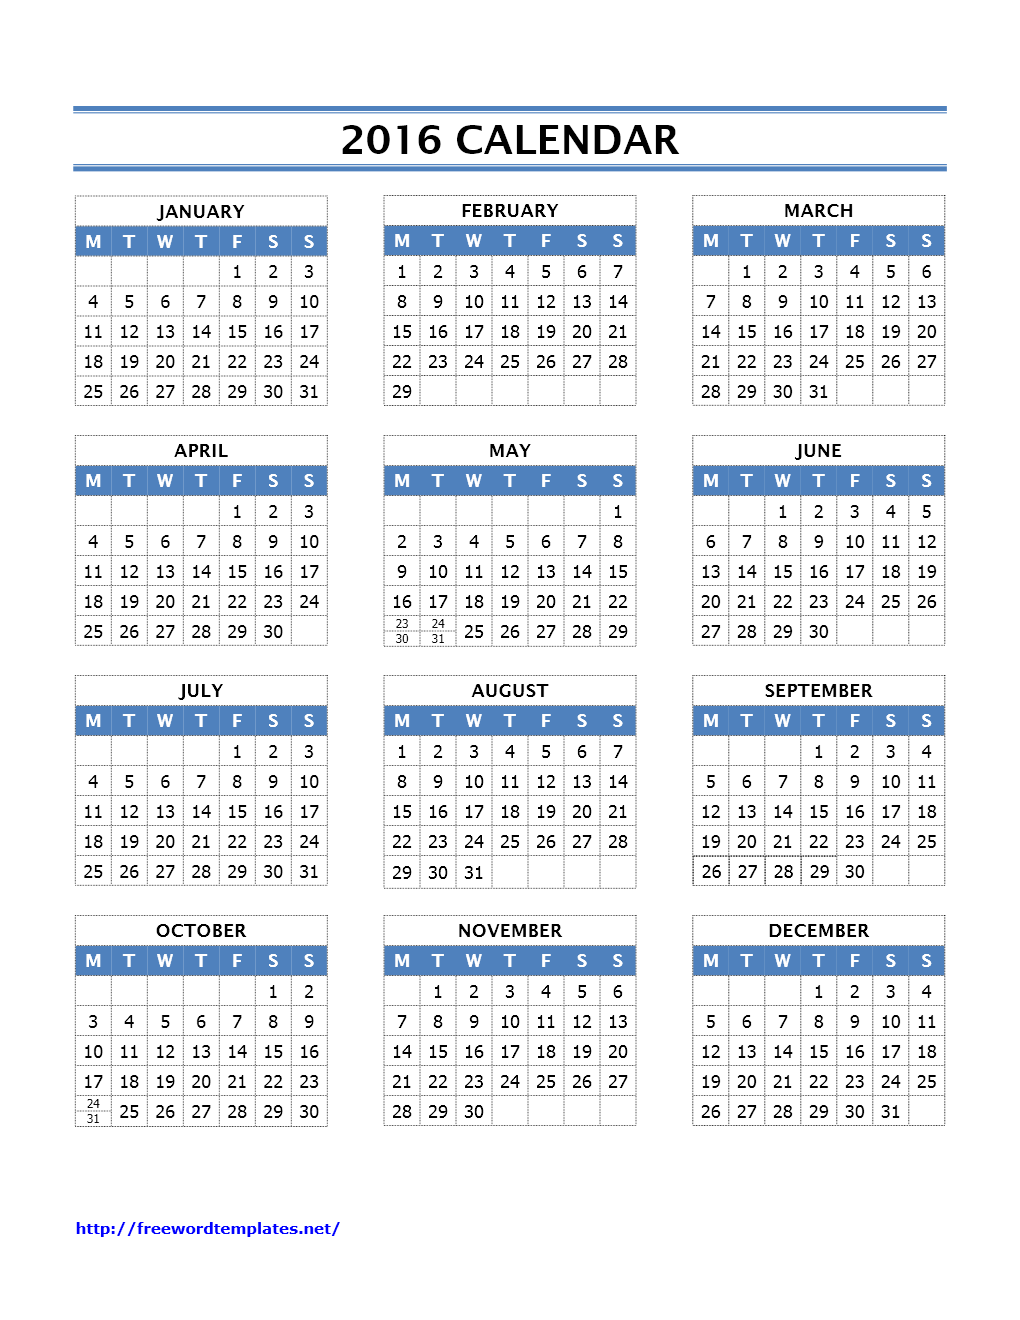 2016 calendar templates for photoshop elements